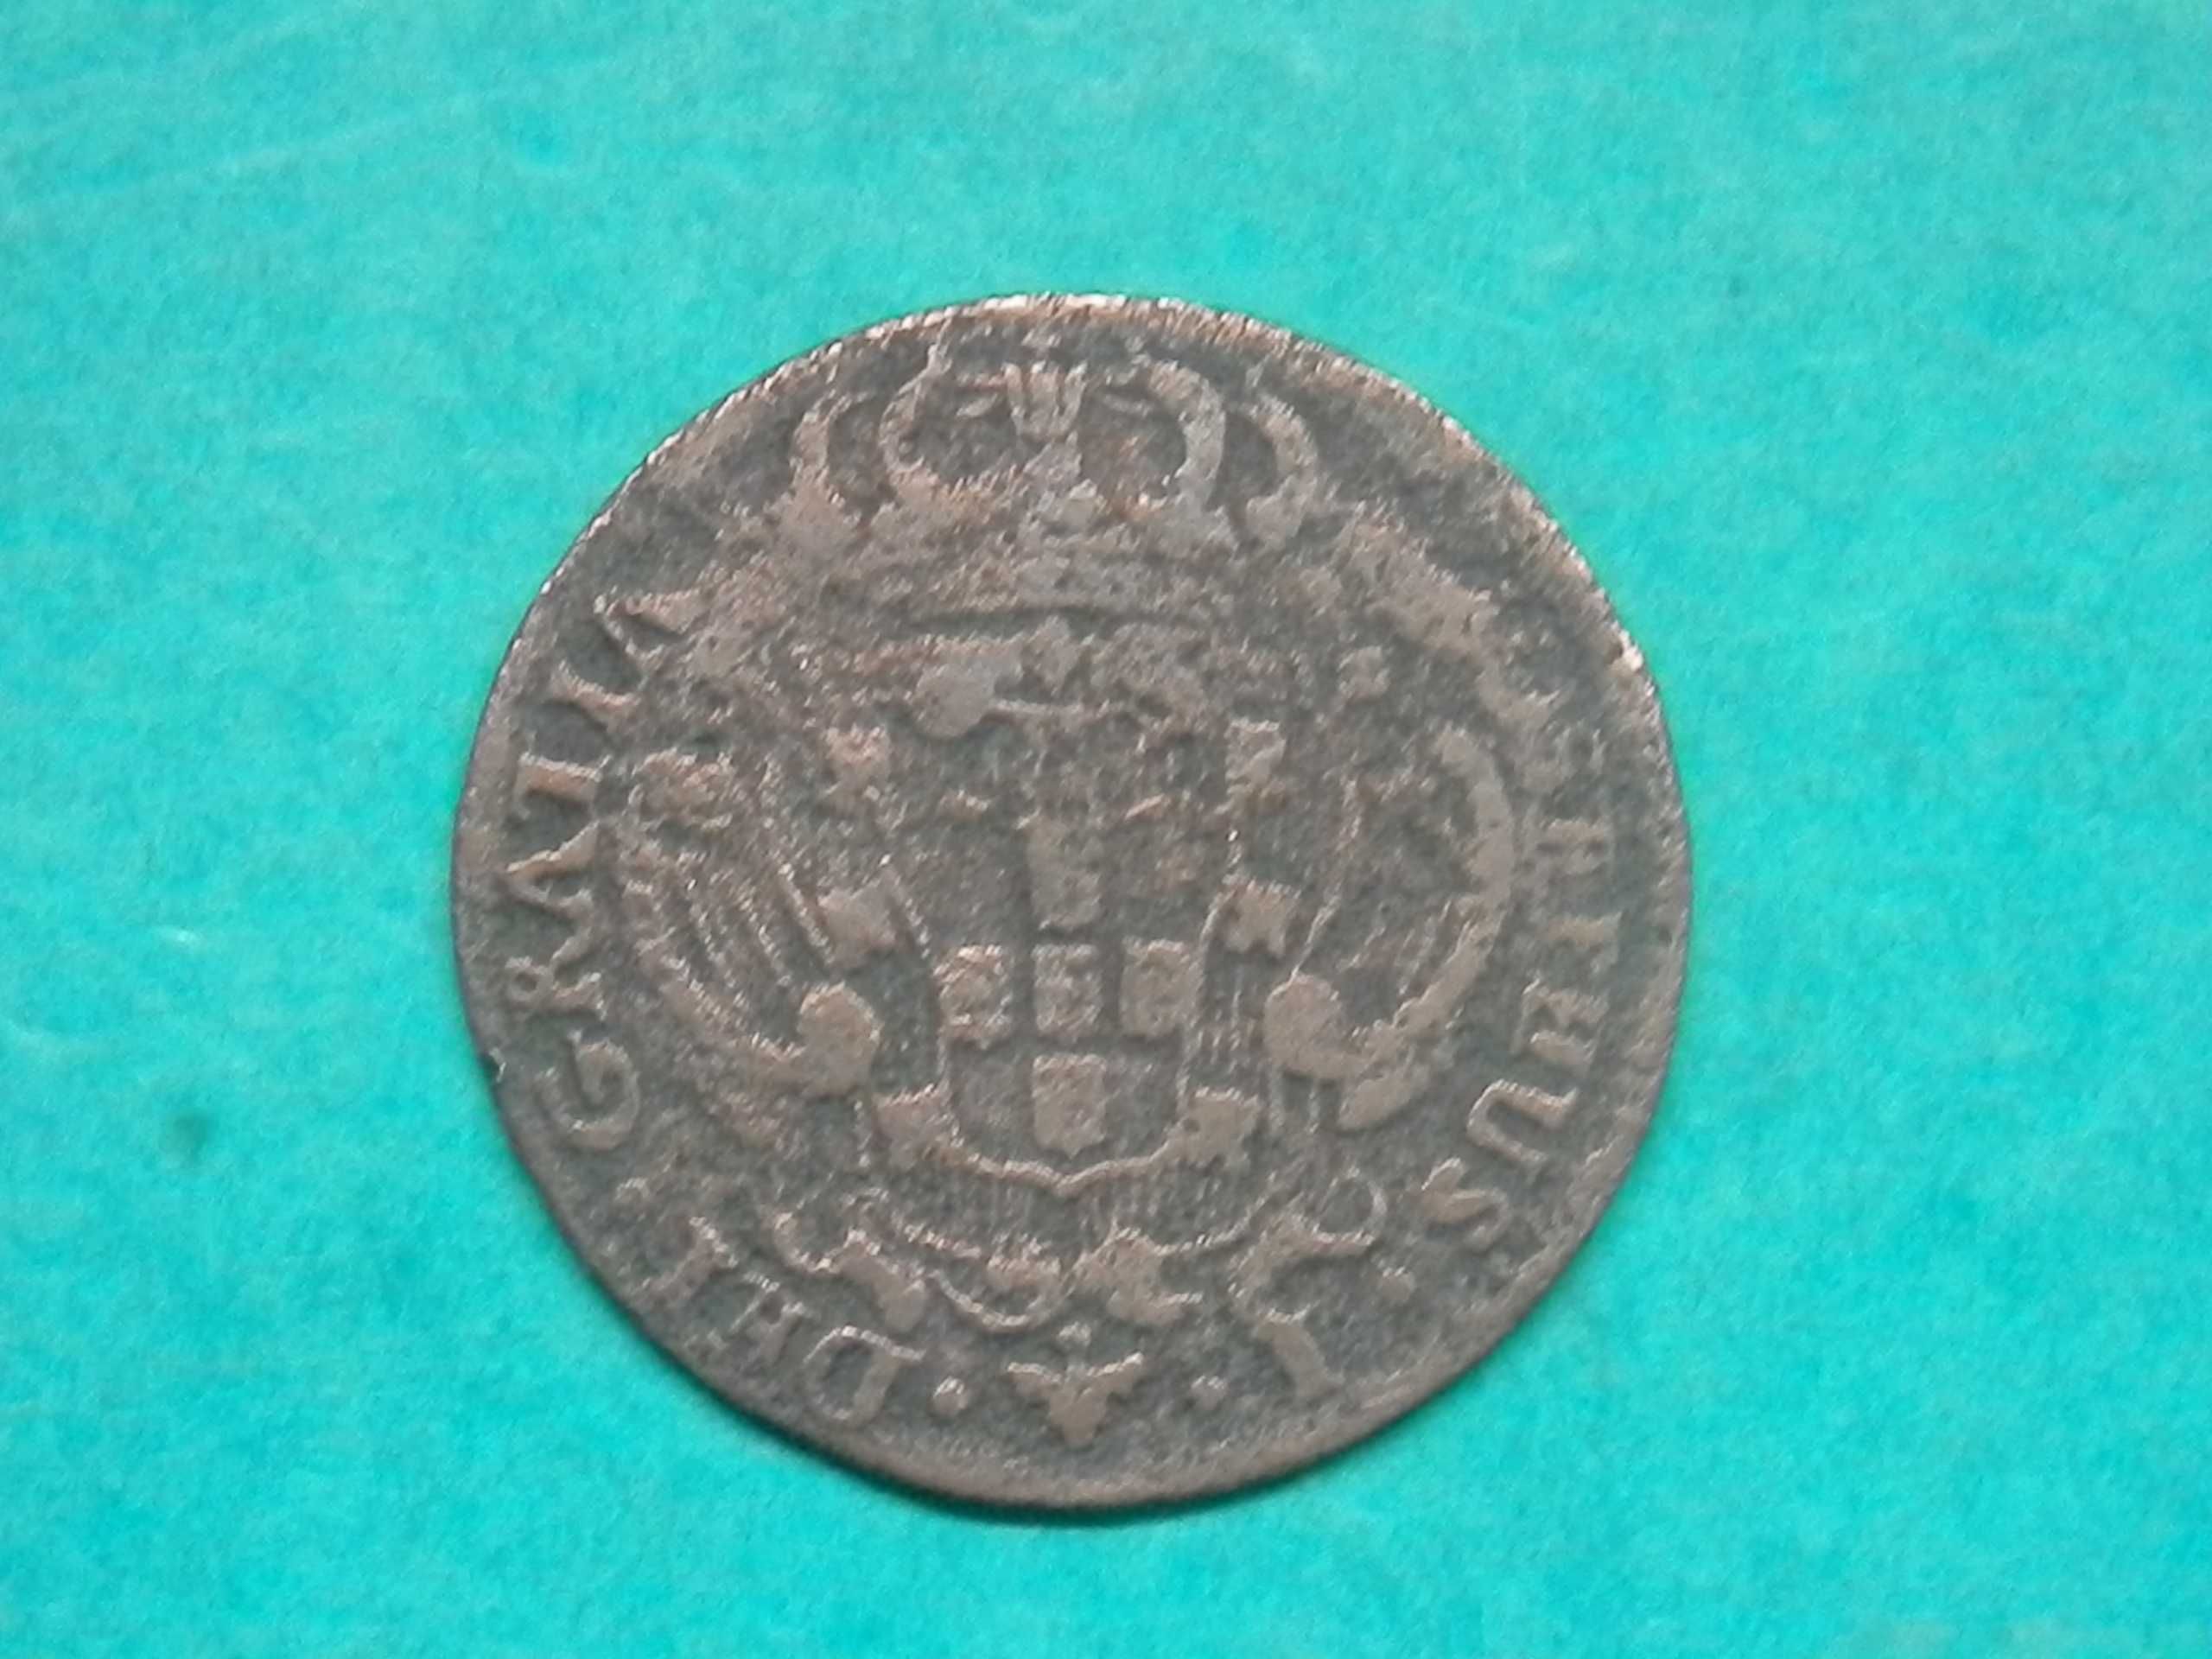 987 - José I: III réis 1751 cobre, por 18,00